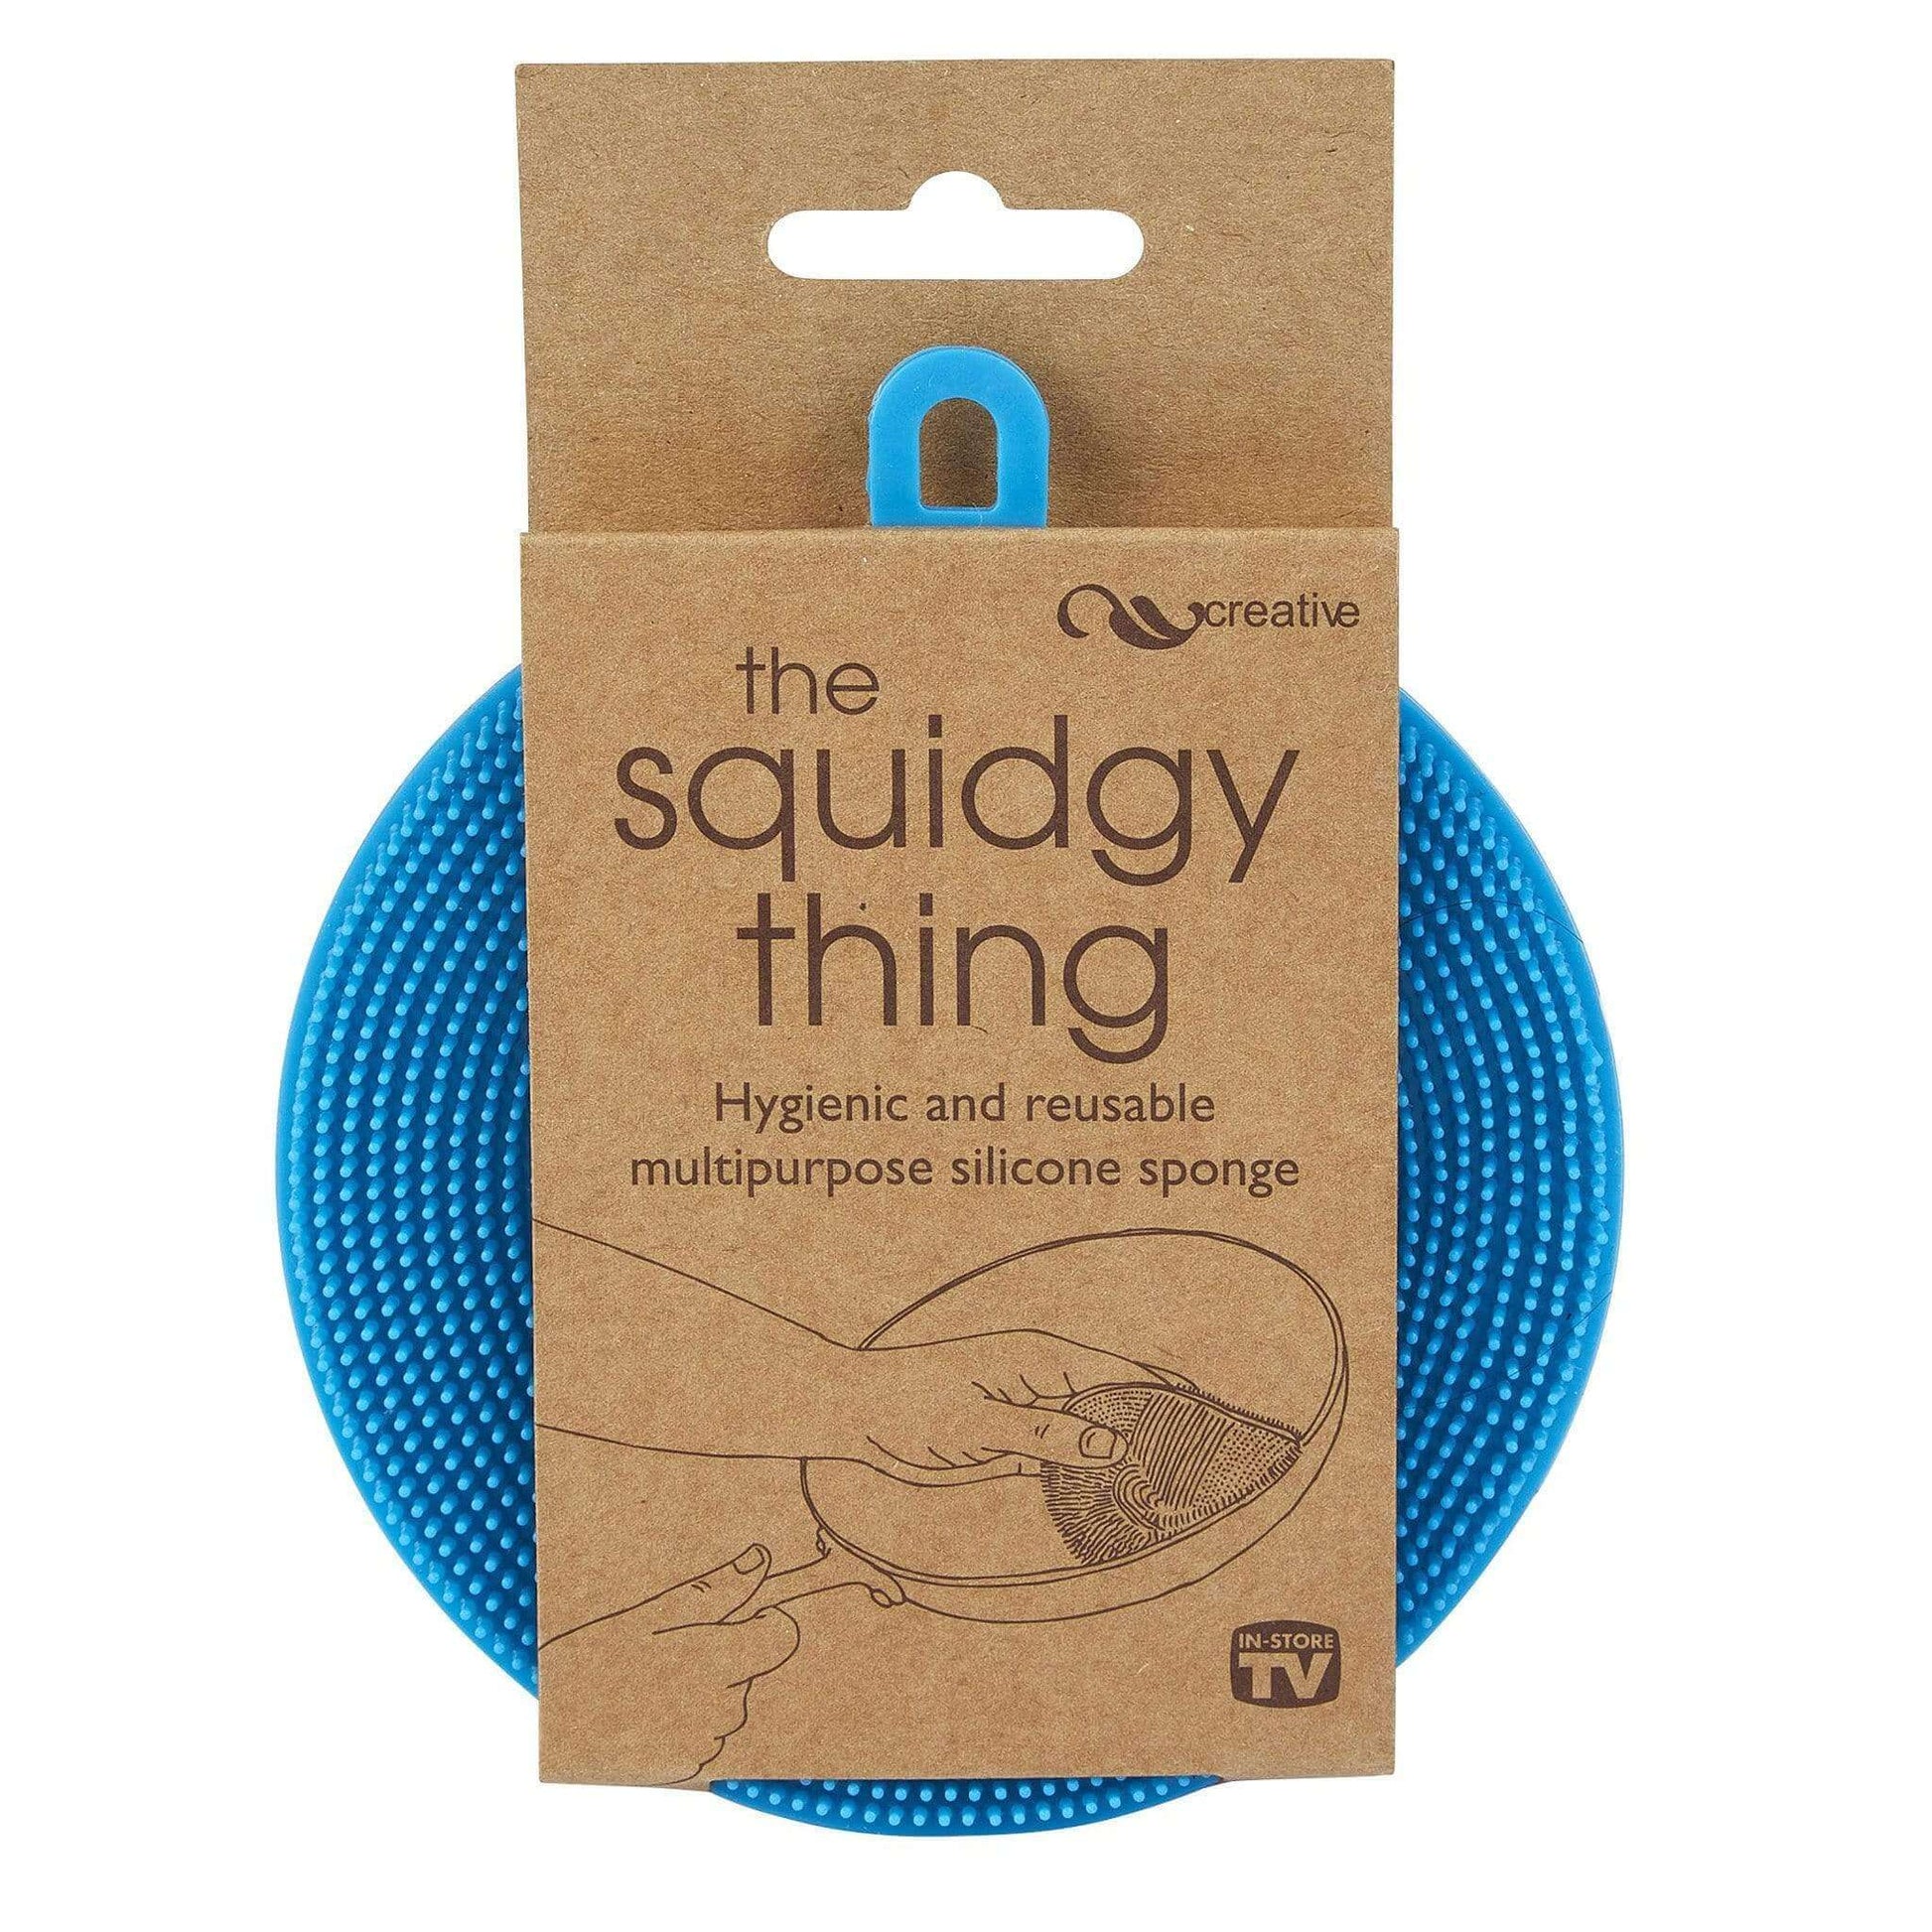 Kitchenware  -  Creative Squidgy Thing  -  50151758